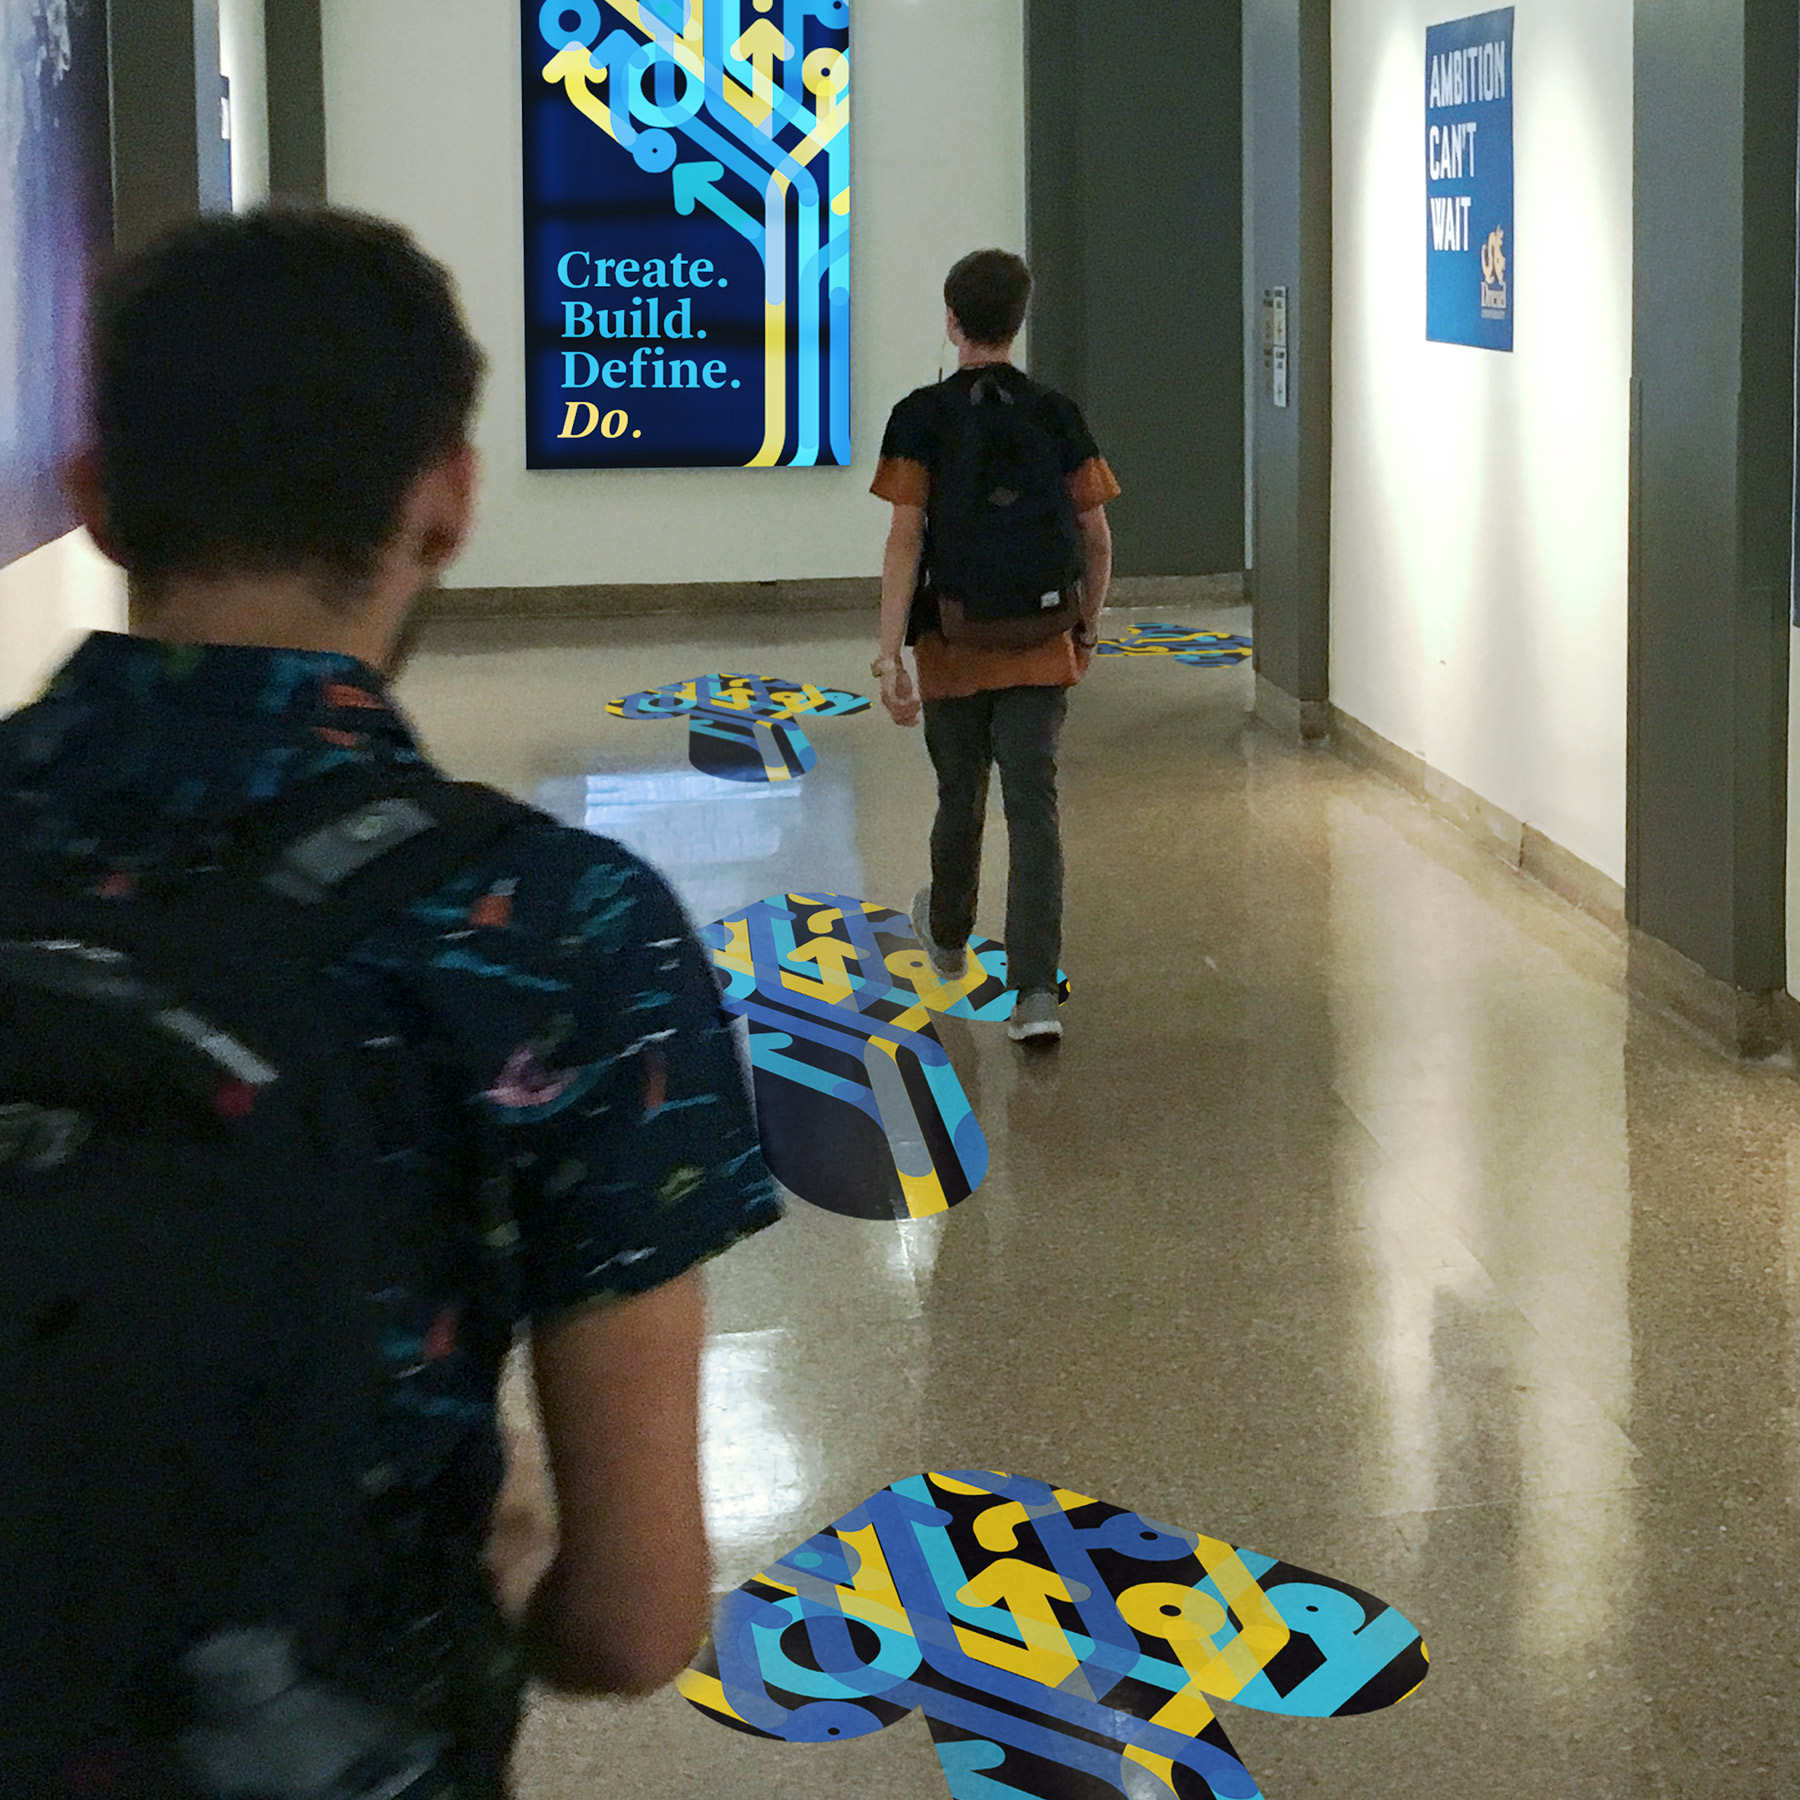 New brand campaign for Drexel University, floor graphics